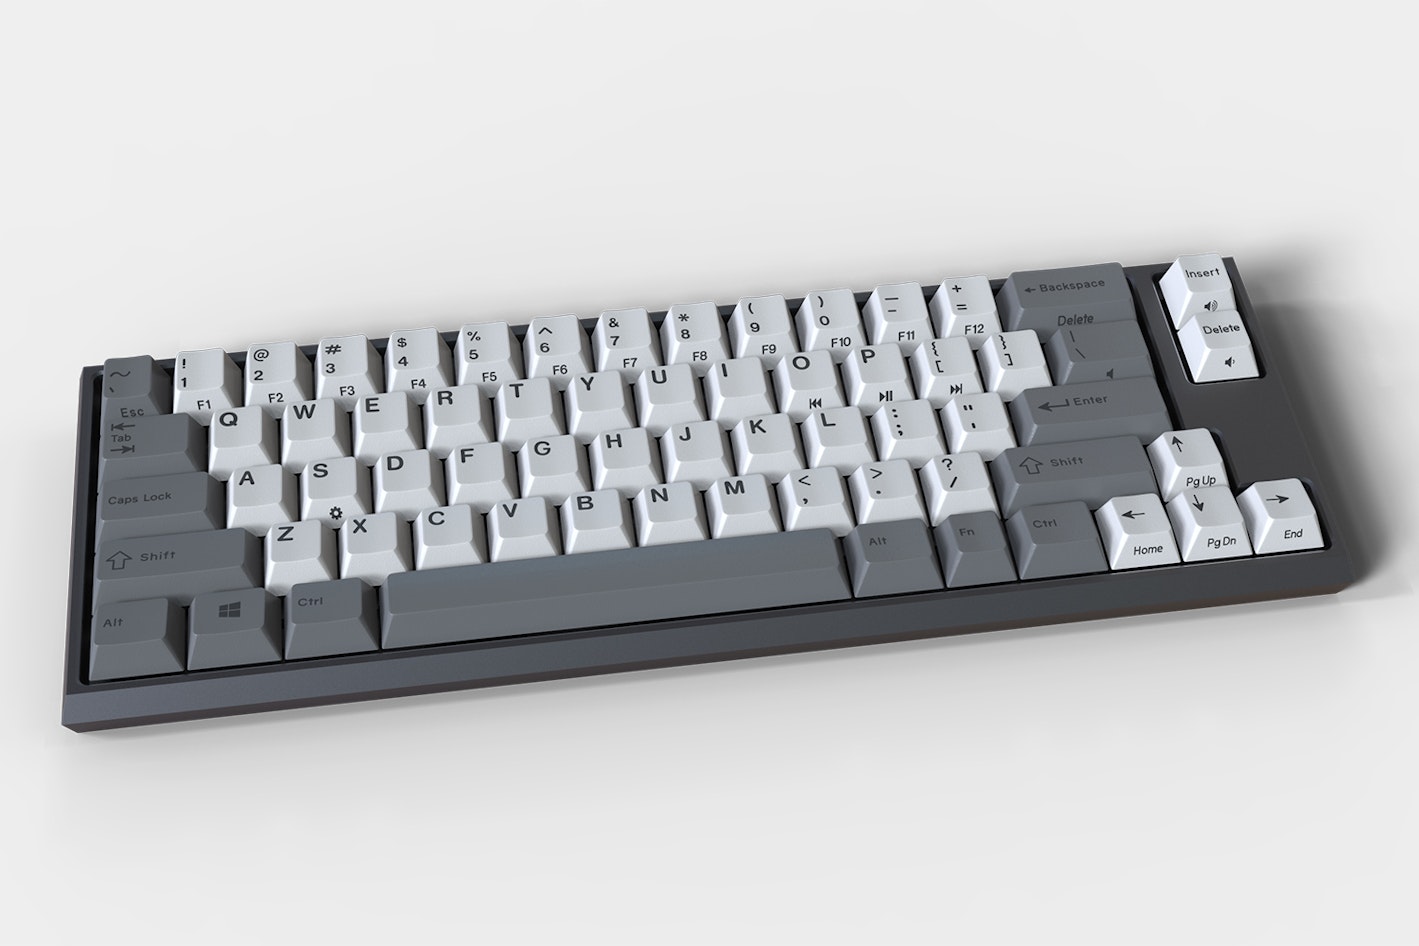 Clueboard 66% Custom Mechanical Keyboard Kit Price Reviews Massdrop